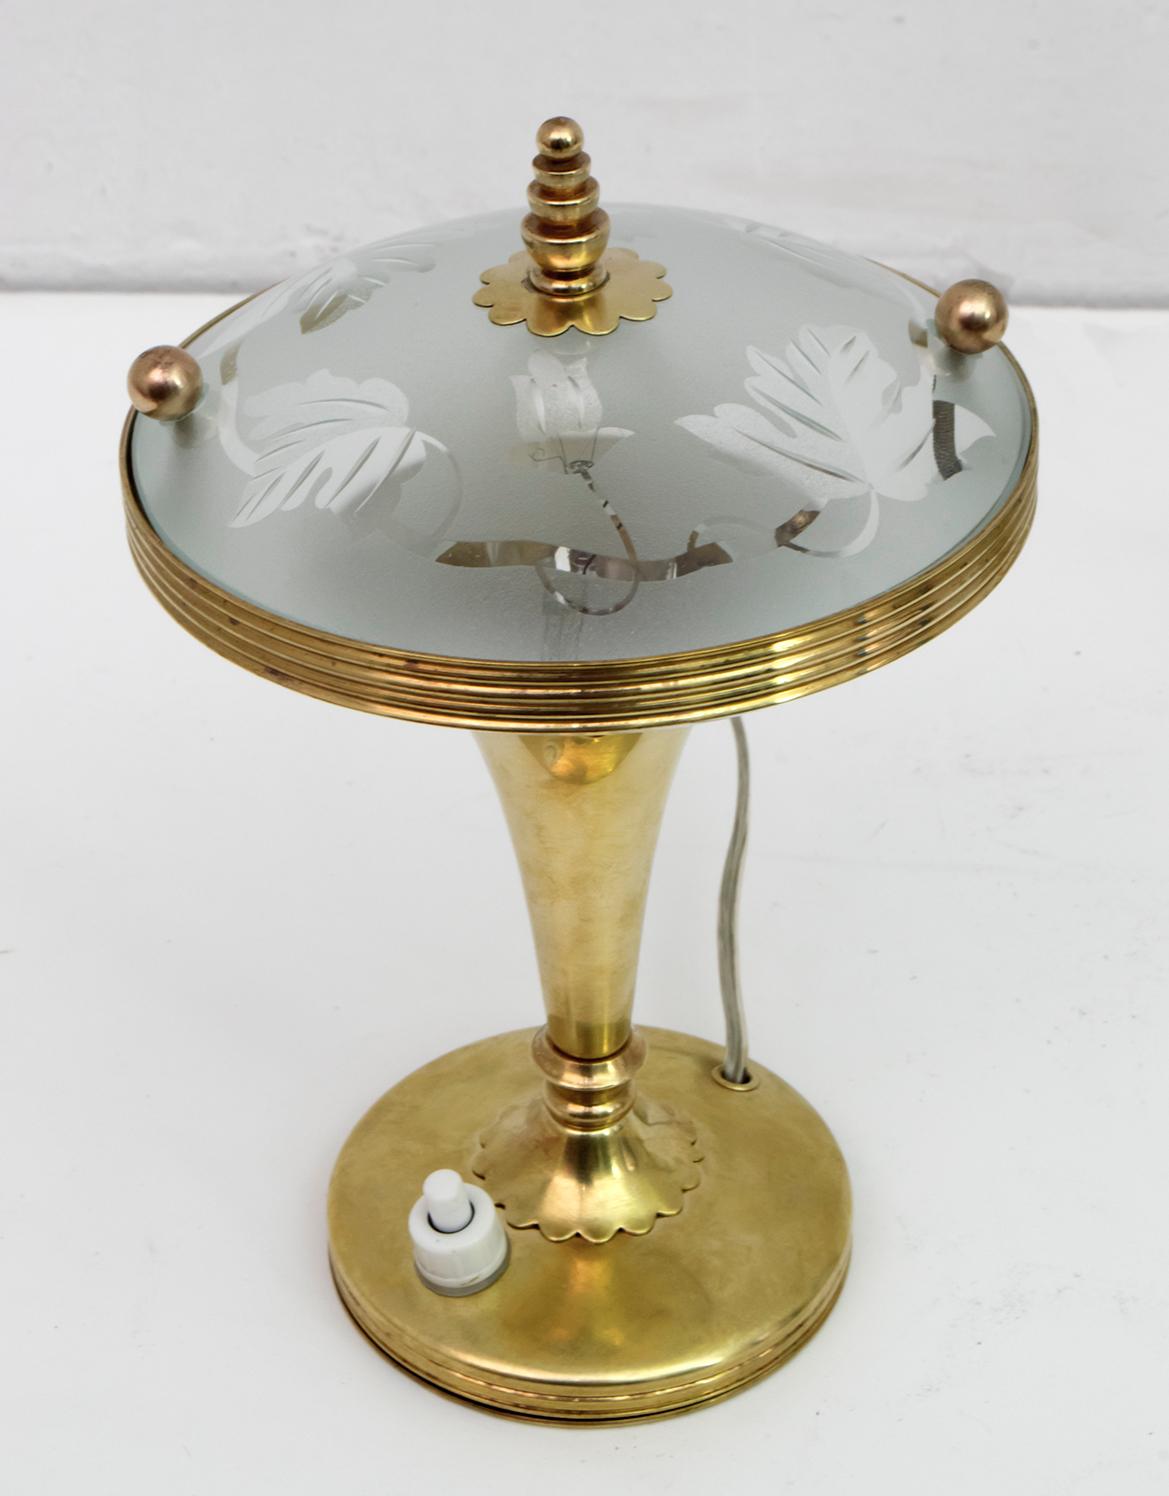 Pair of Pietro Chiesa Midcentury Italian Brass Table Lamps by Fontana Arte 1940s 1